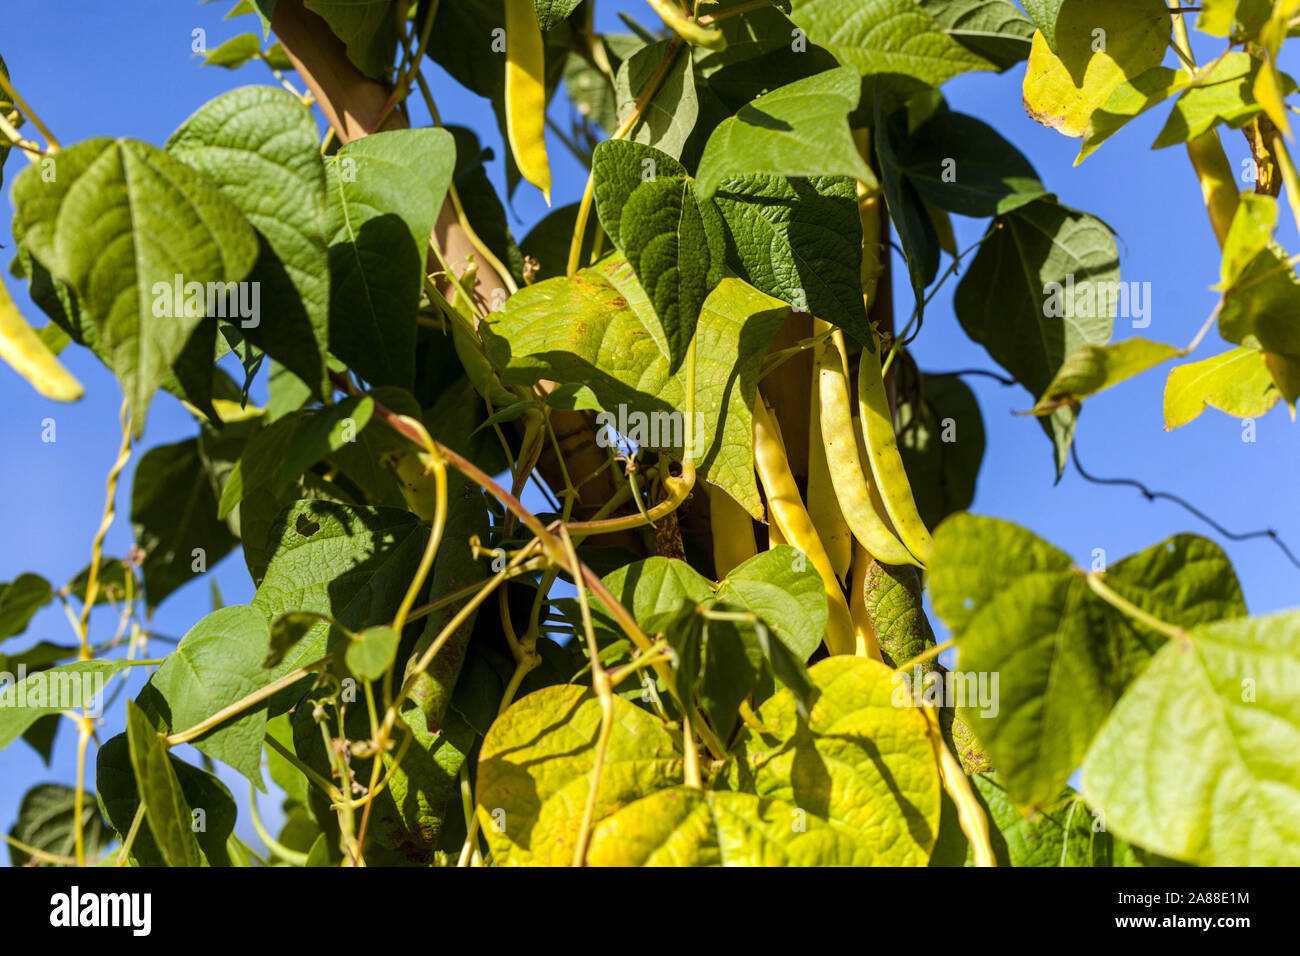 Common beans Phaseolus vulgaris 'Borlotto di Vigevano' on vine Stock Photo